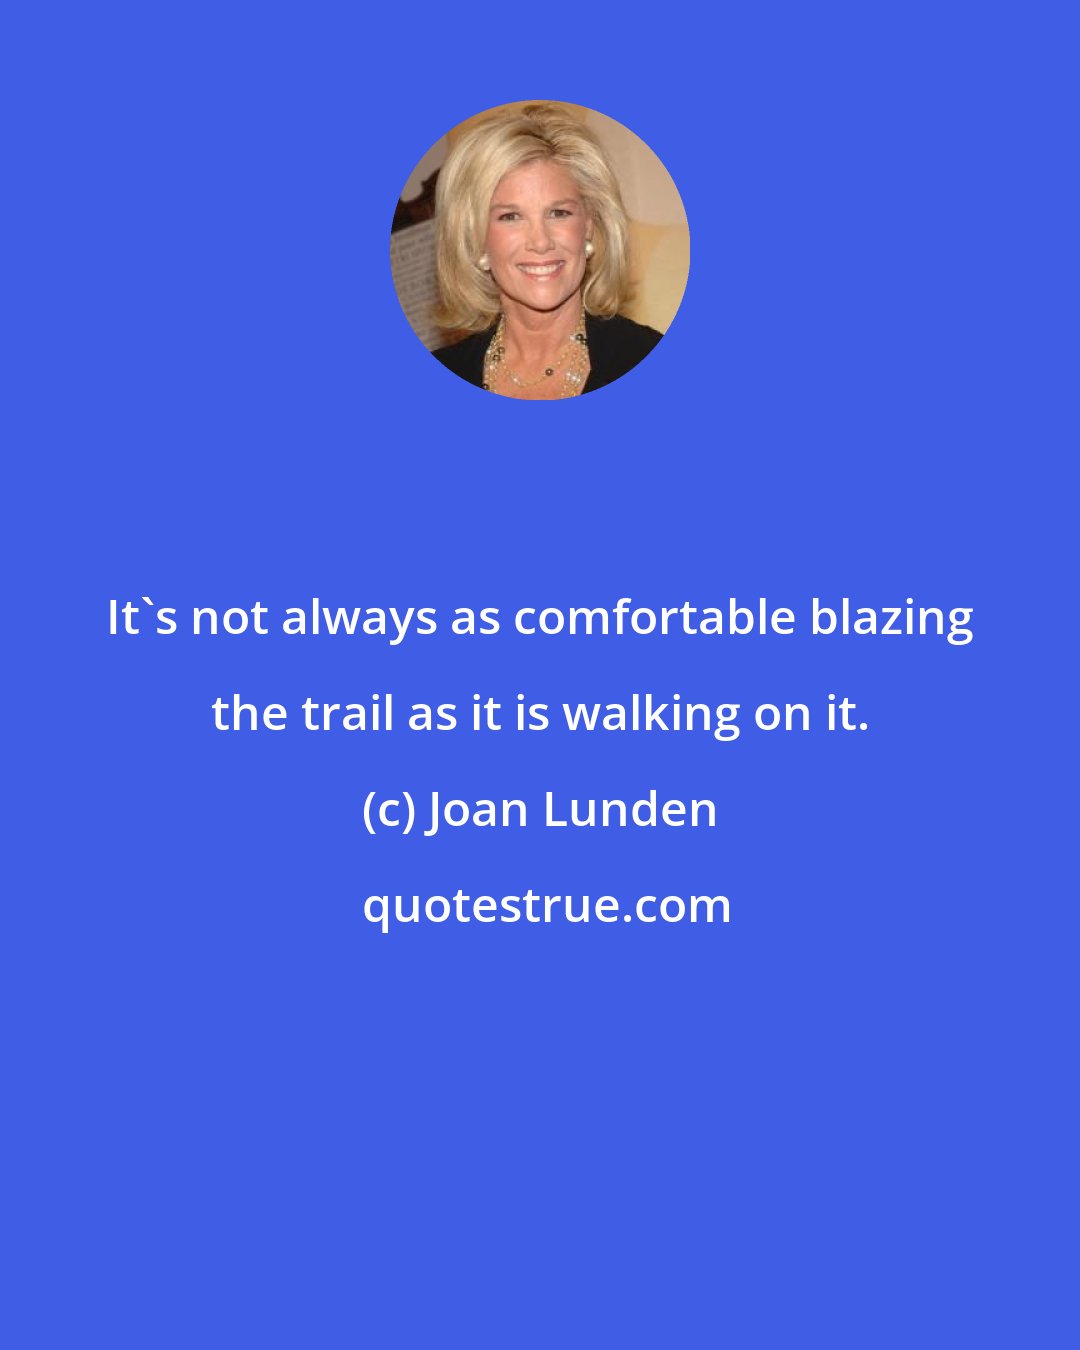 Joan Lunden: It's not always as comfortable blazing the trail as it is walking on it.